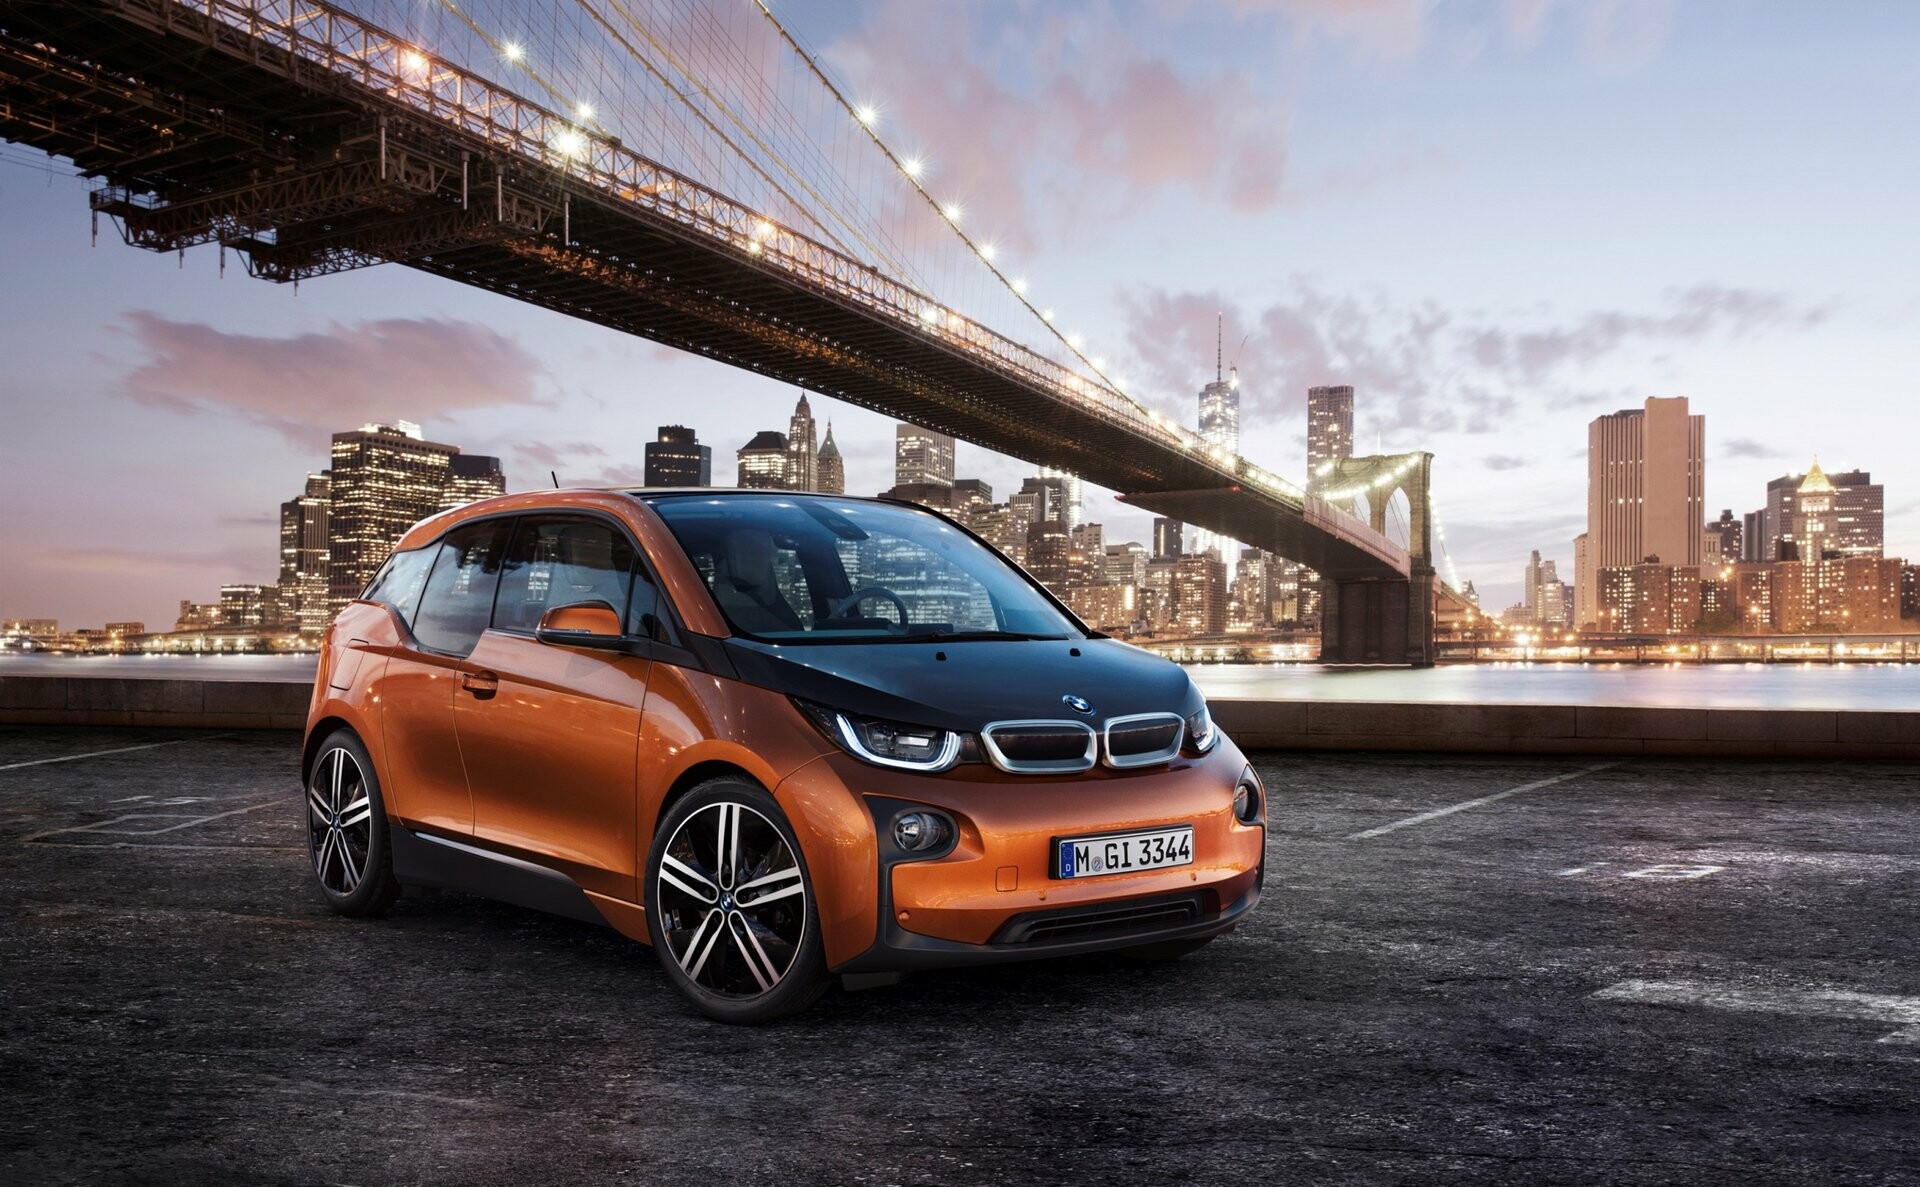 BMW i3: Ο πρωτοπόρος των ηλεκτρικών οχημάτων κλείνει 6 χρόνια ζωής